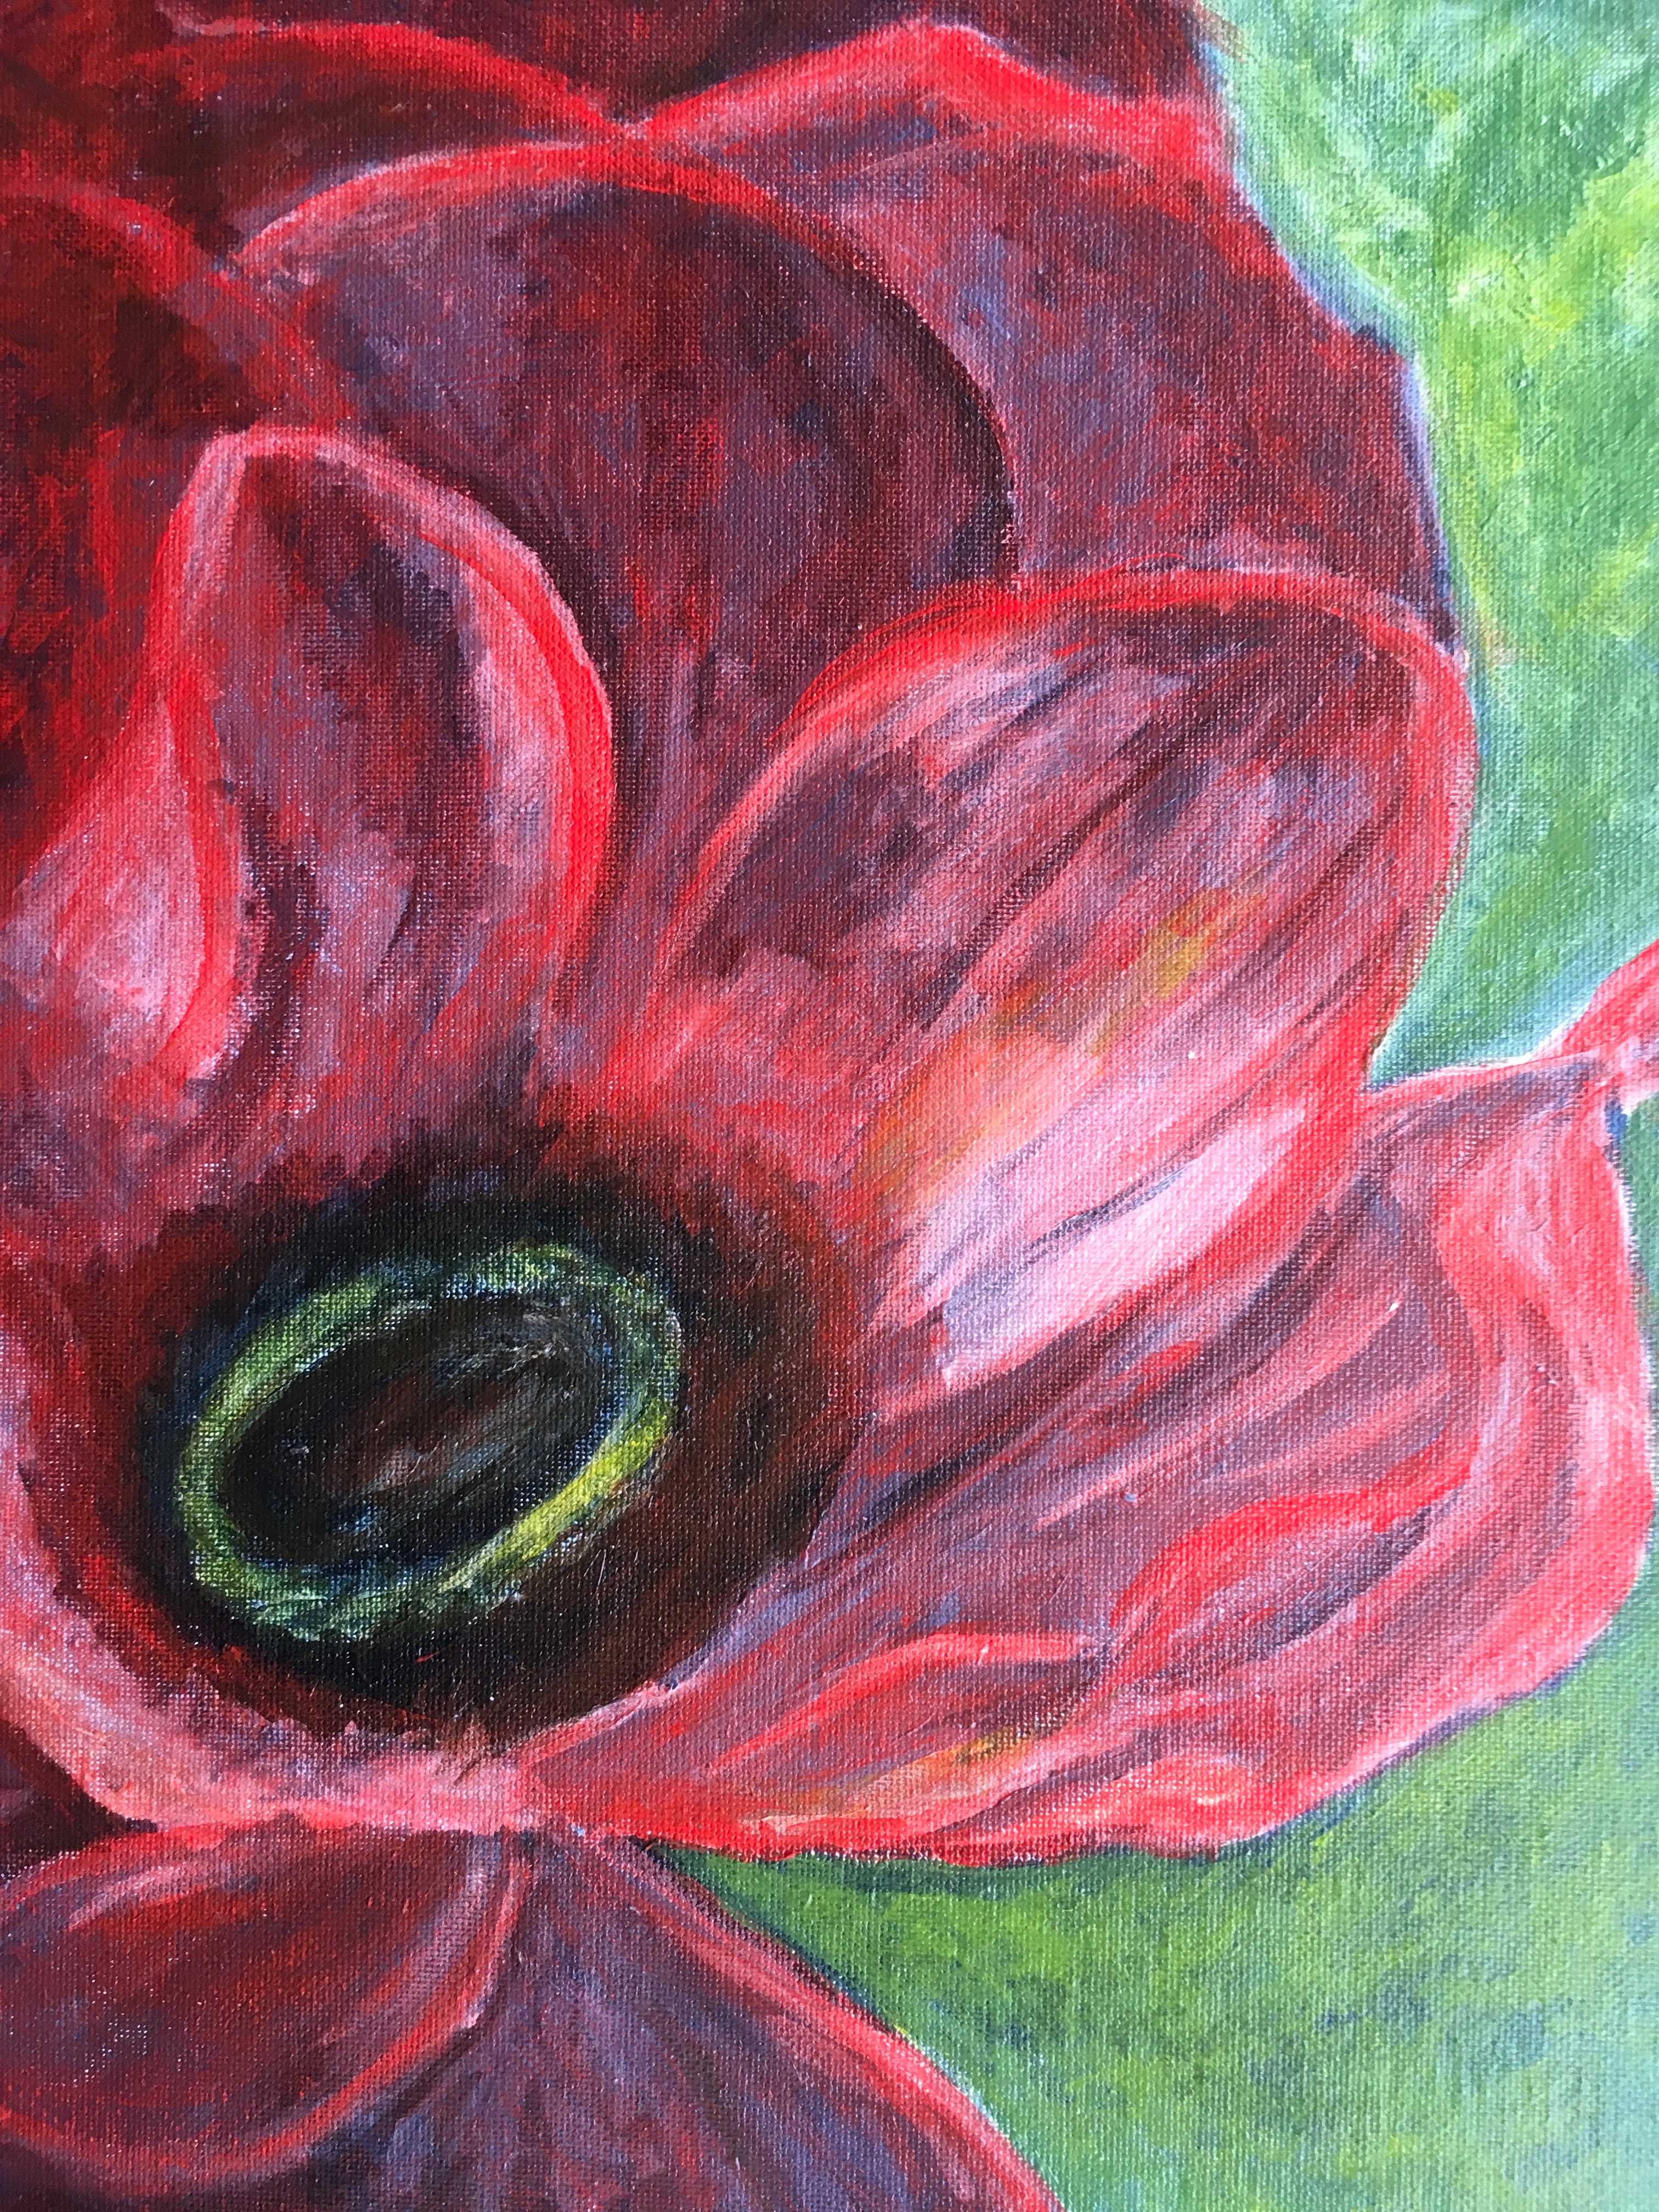 Poppy acrylic on canvas panel, 11 x 14"